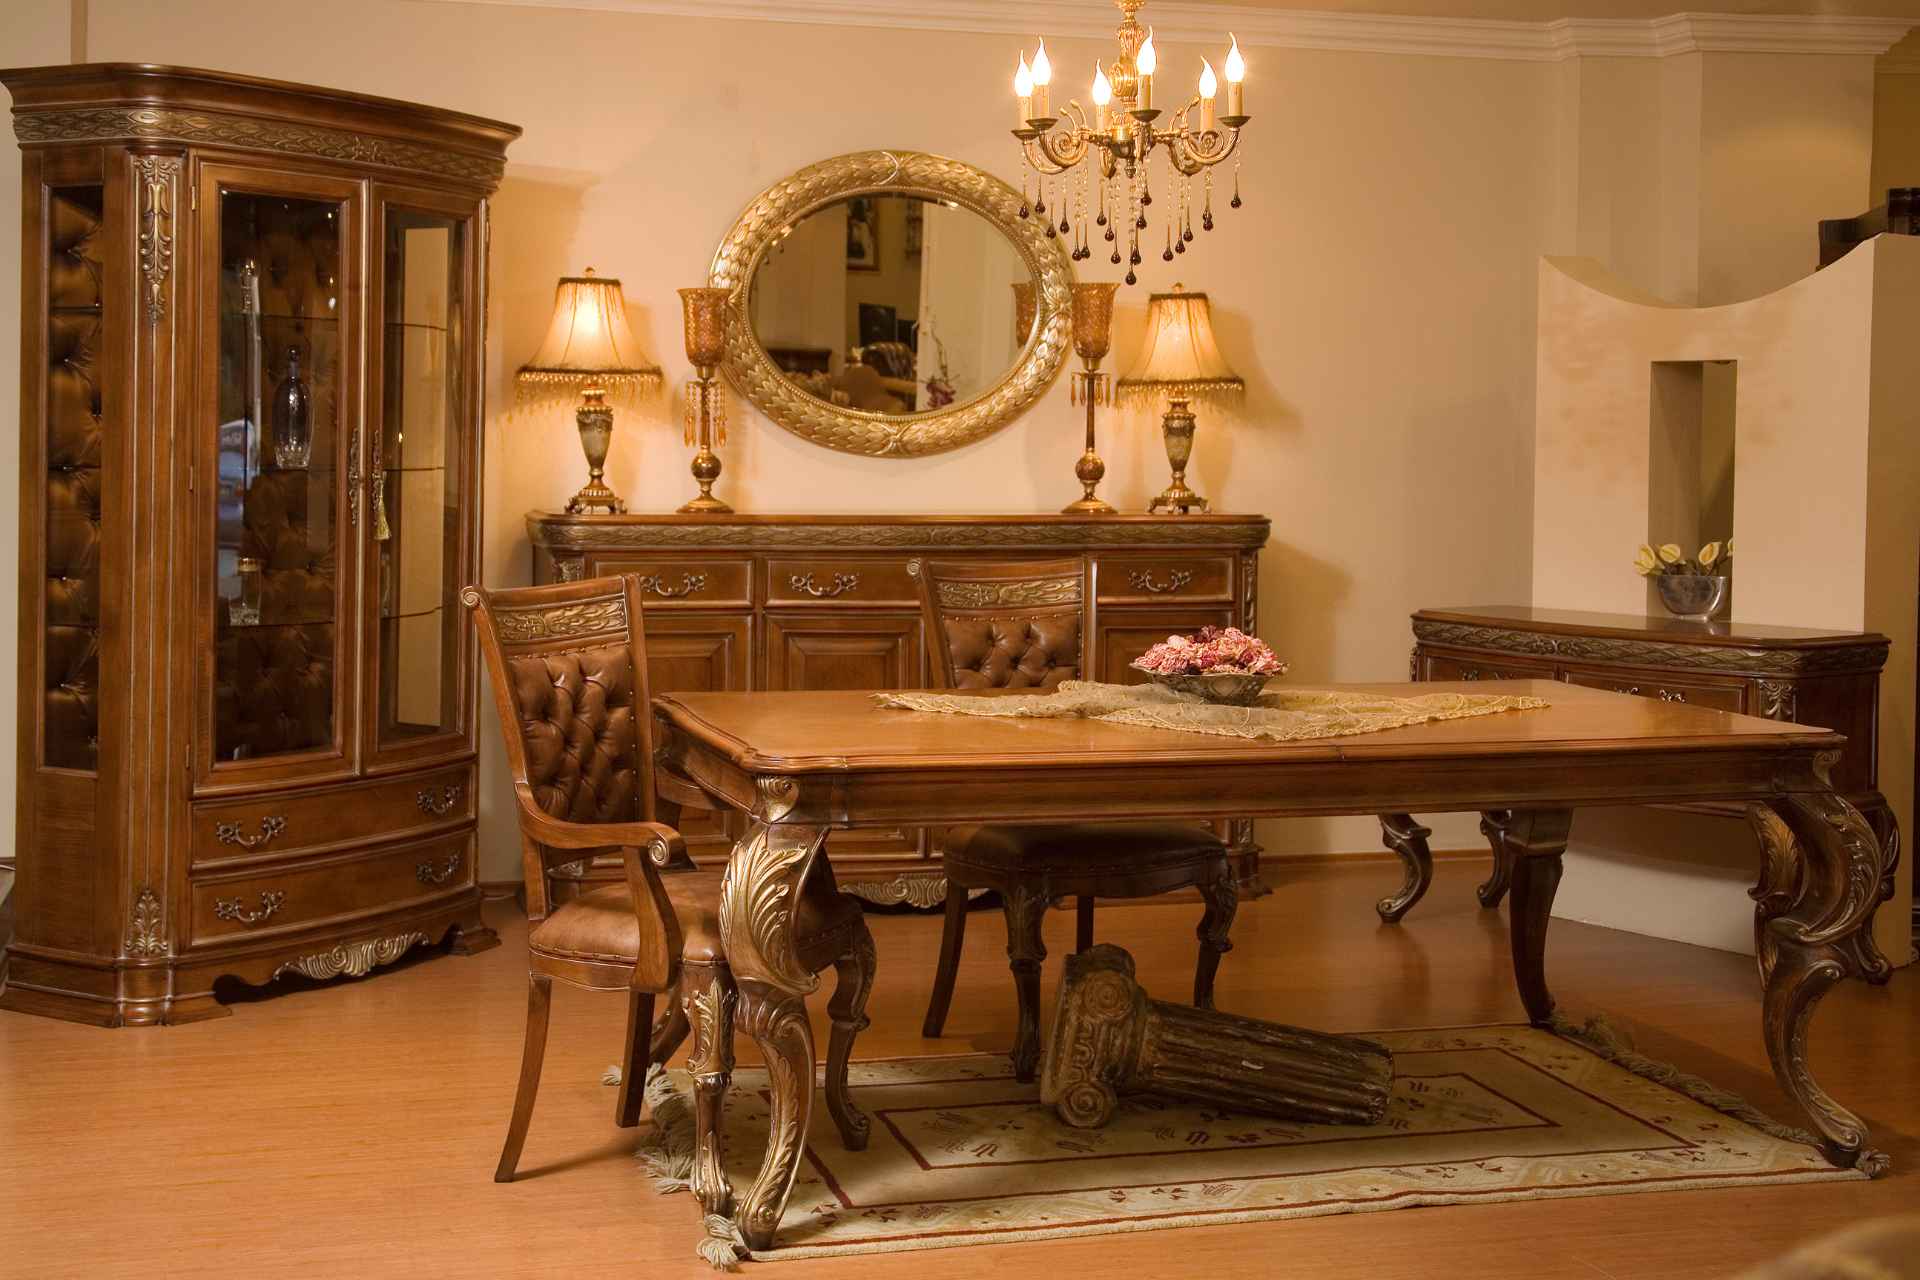 Antique Furniture Appraisals  Online Expert Appraisals in 24-Hours